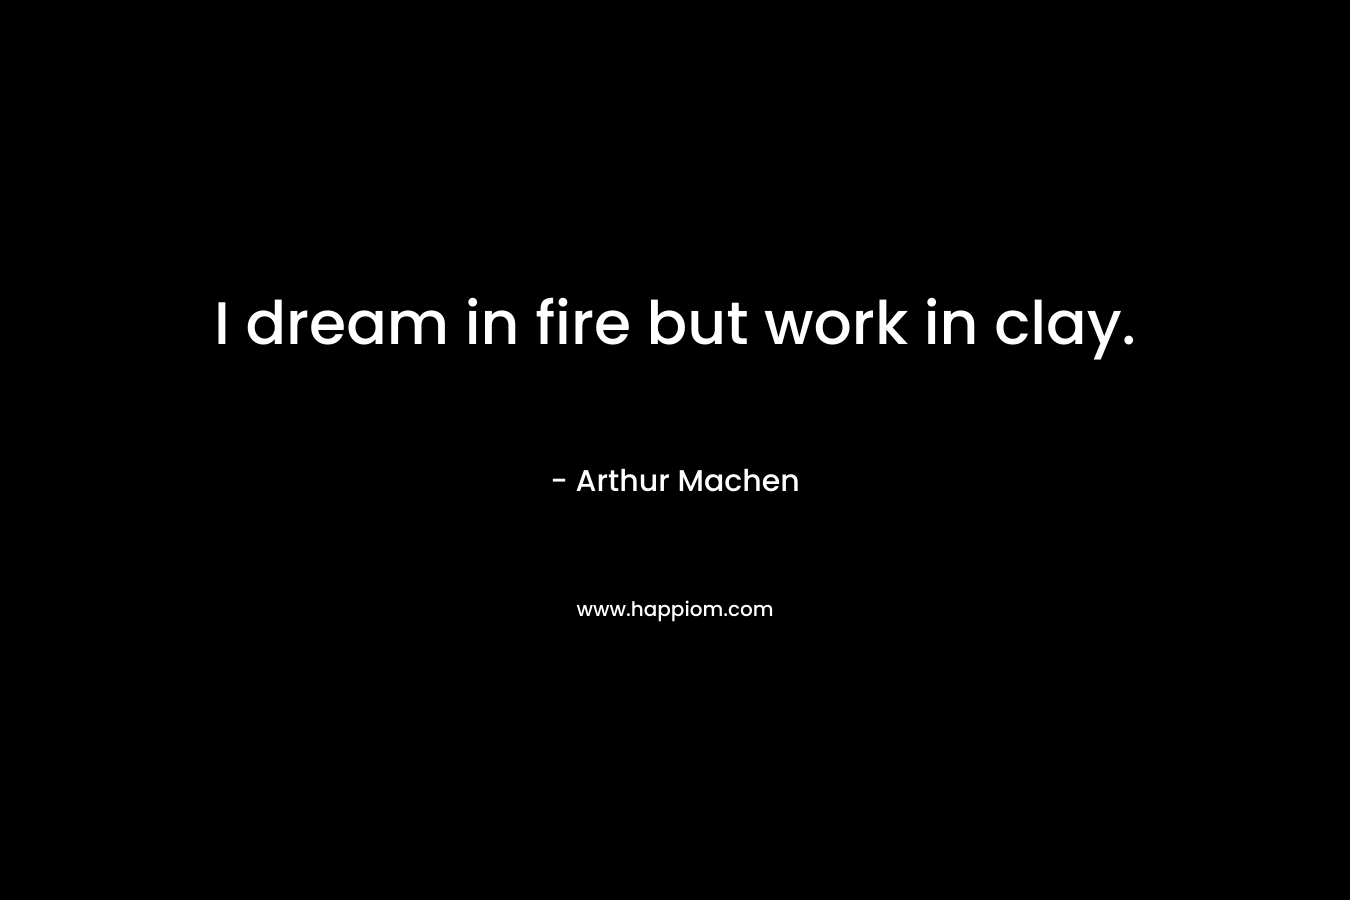 I dream in fire but work in clay.